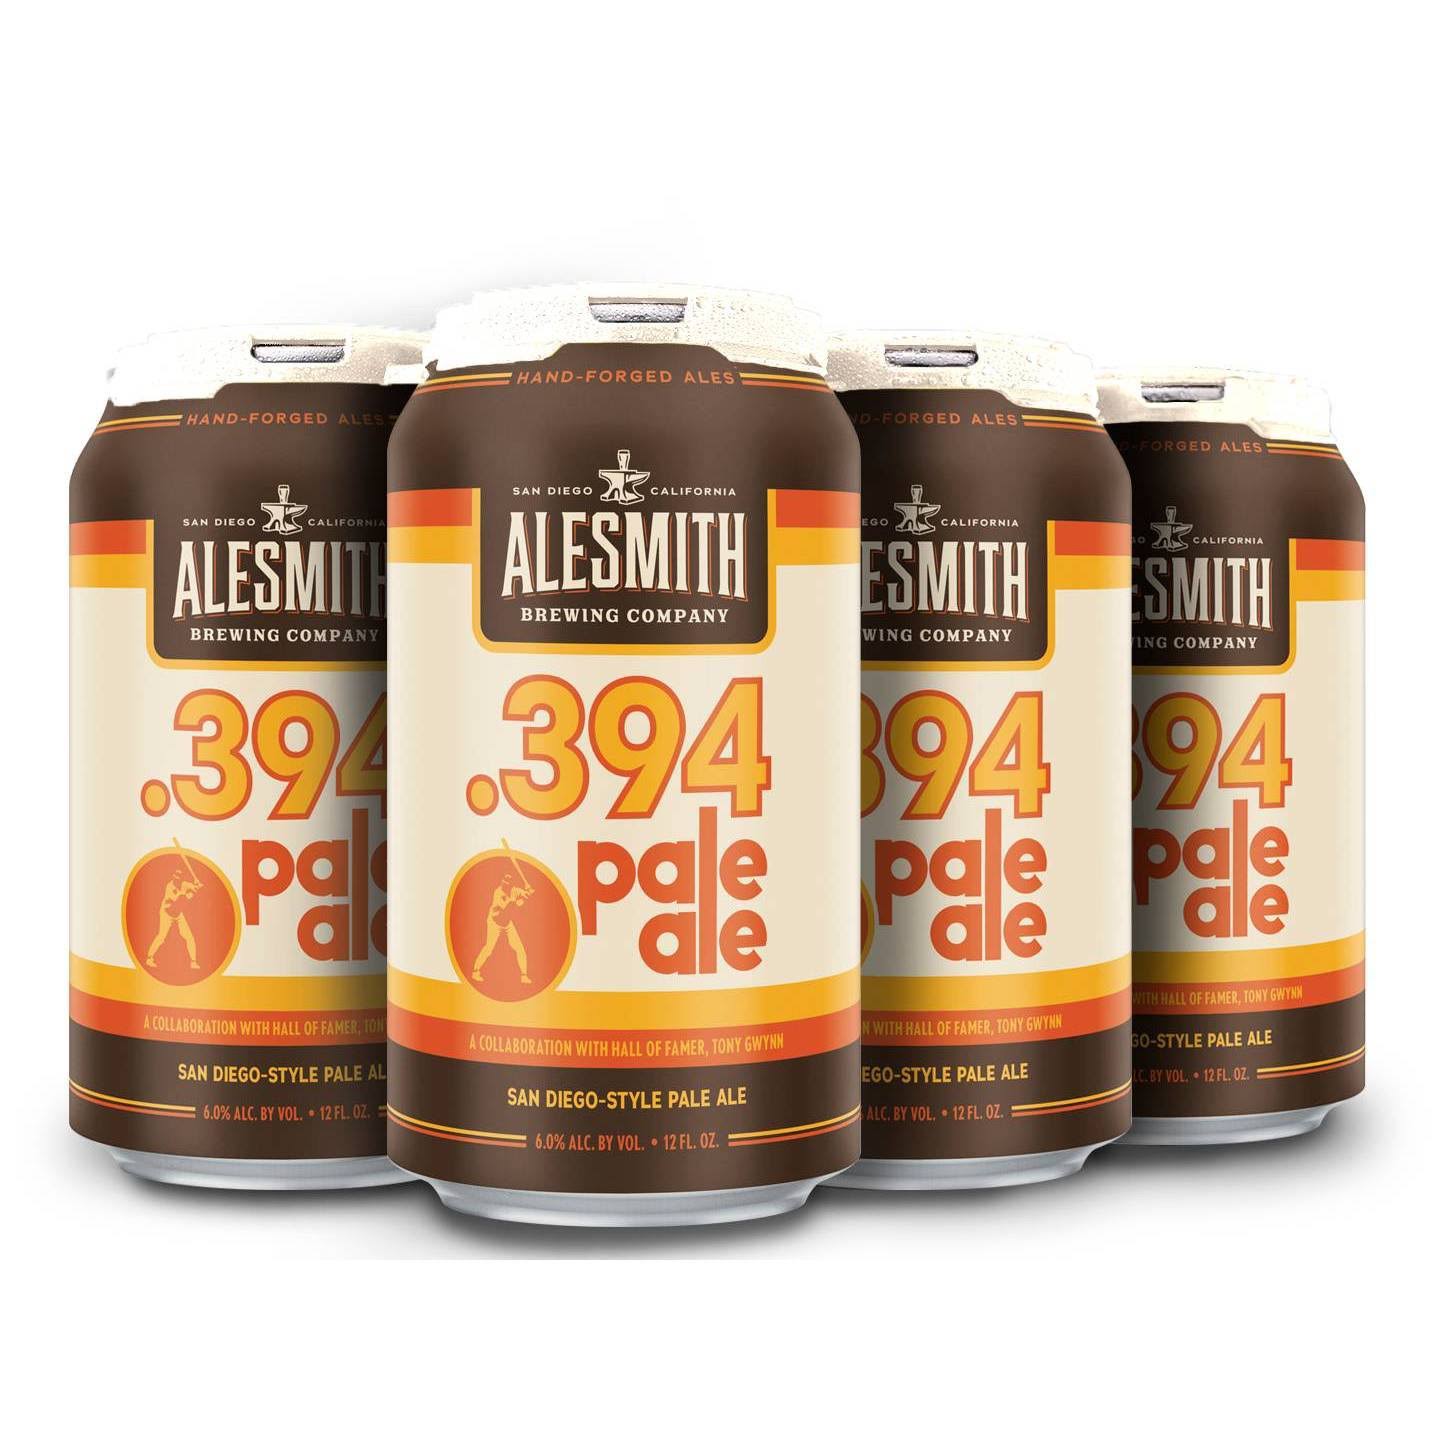 Alesmith Brewing Beer, San Diego Pale Ale .394 - 6 pack, 12 fl oz cans